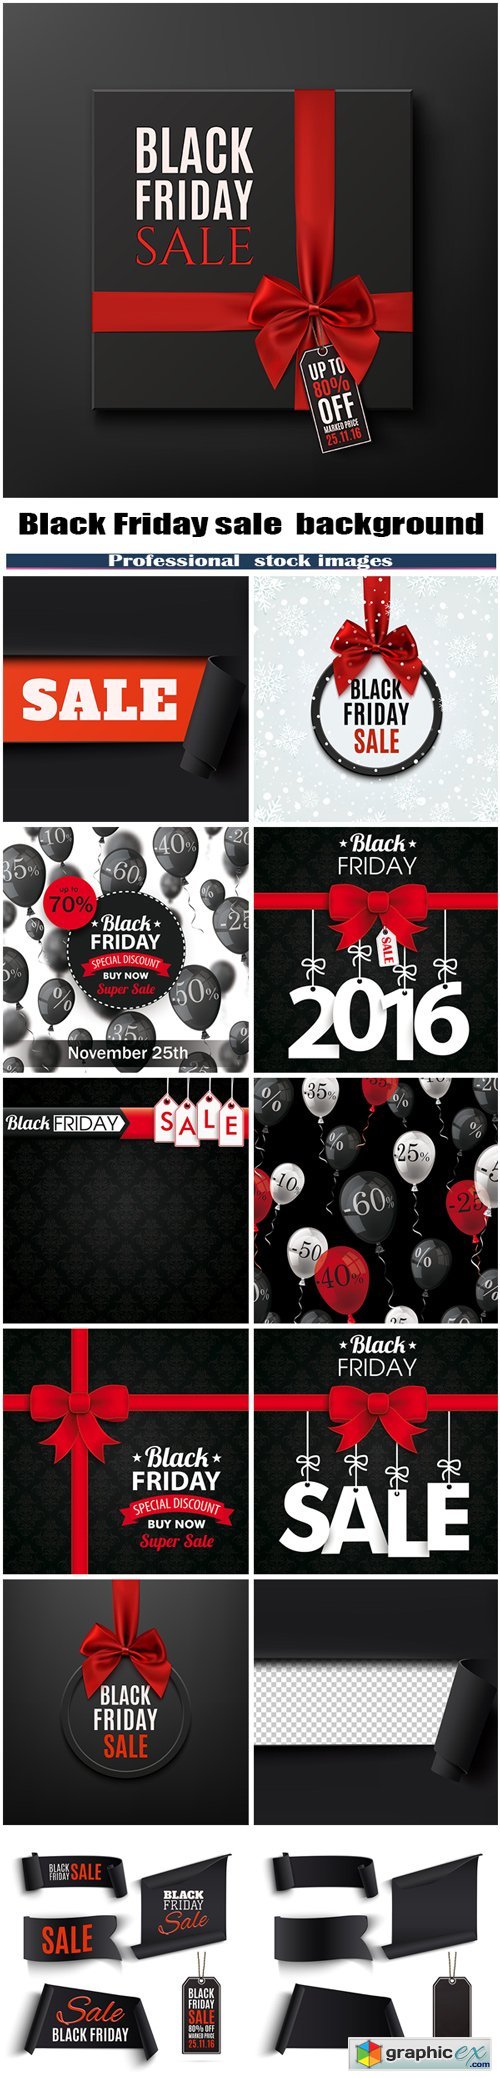 Black Friday Sale conceptual background